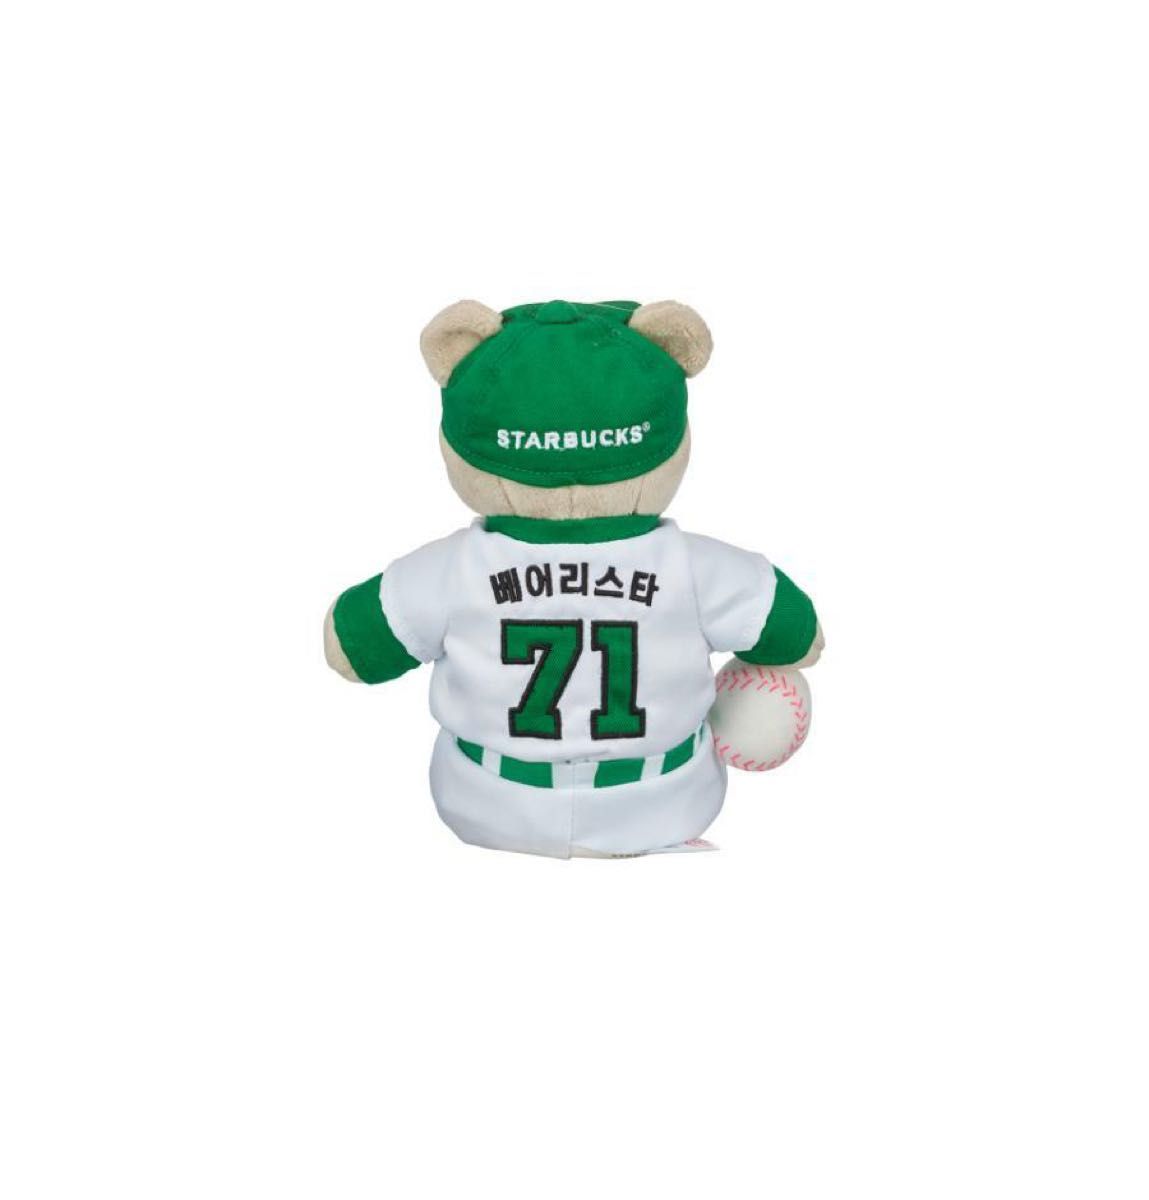 Starbucks baseball bearista ベースボール ベアリスタ 野球 韓国海外限定品/日本未発売/スタバ